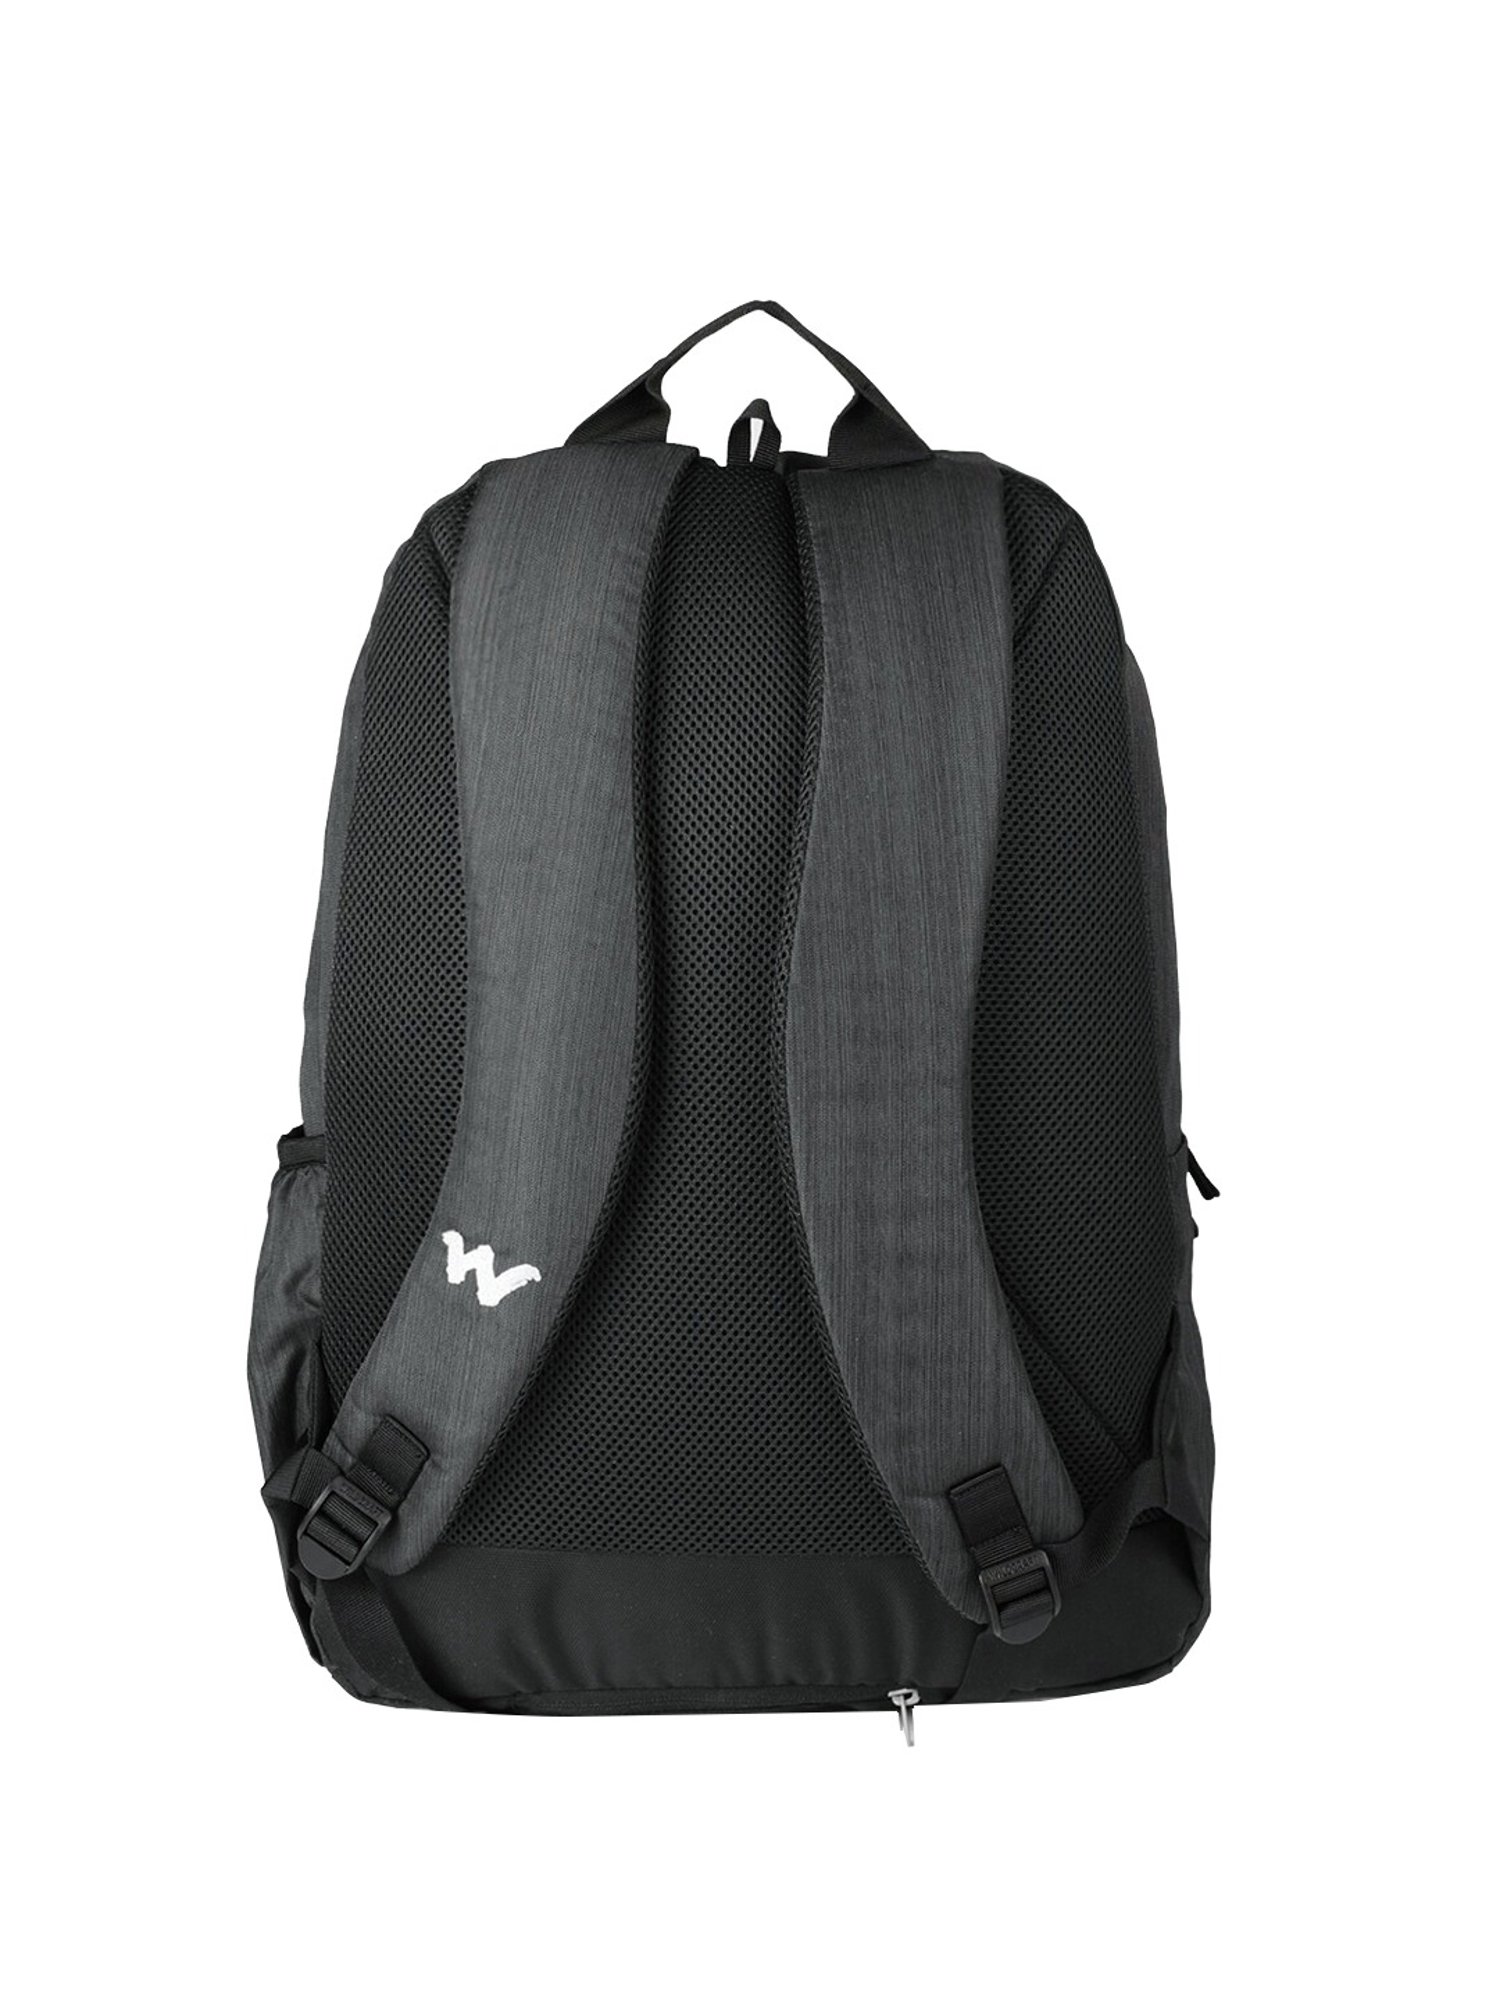 Buy WIKI GIRL 4 Laptop Backpack with Sleeve Separator Black Online   Wildcraft